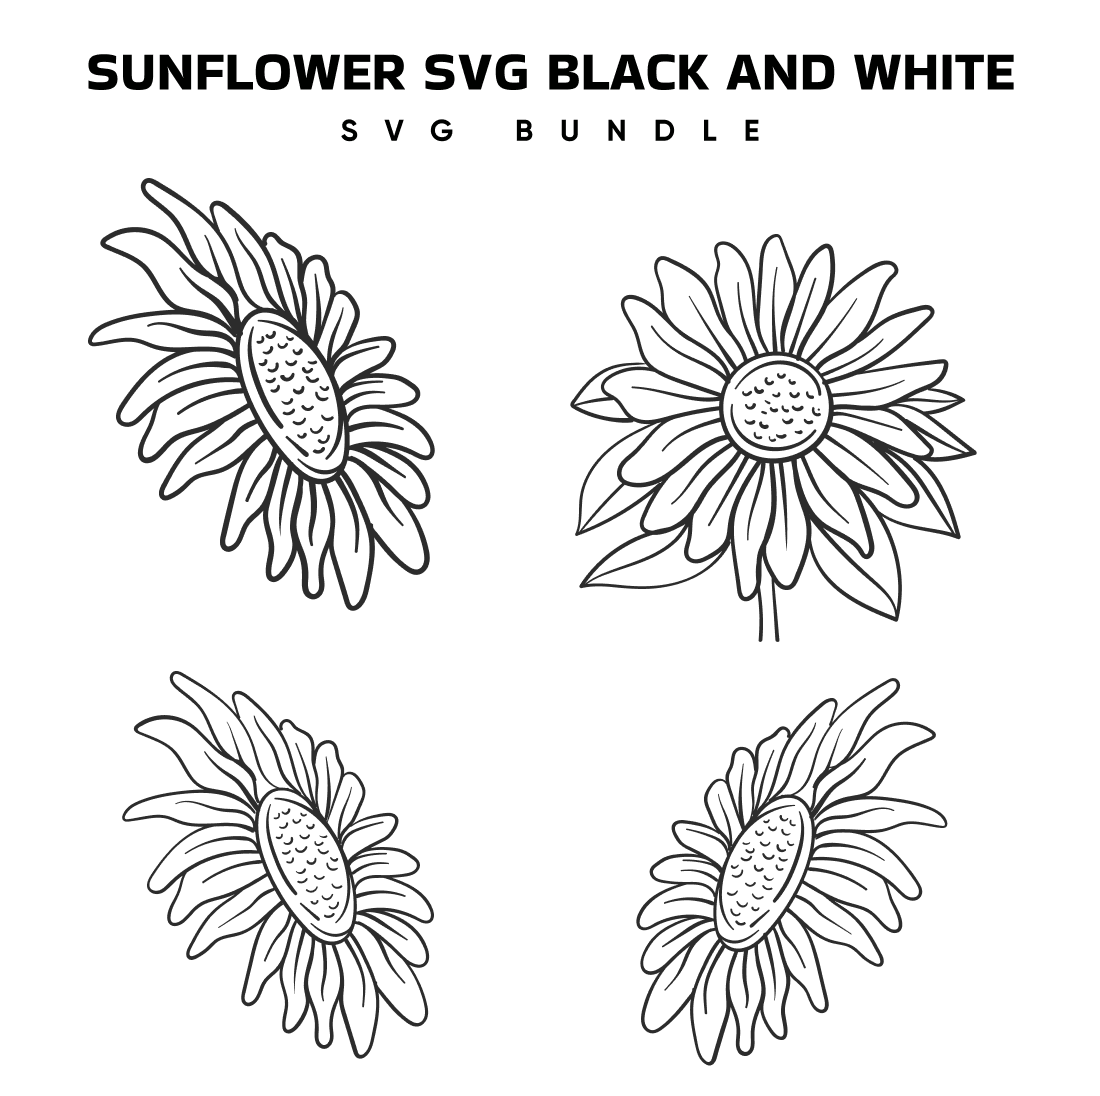 Sunflower SVG Black and White.